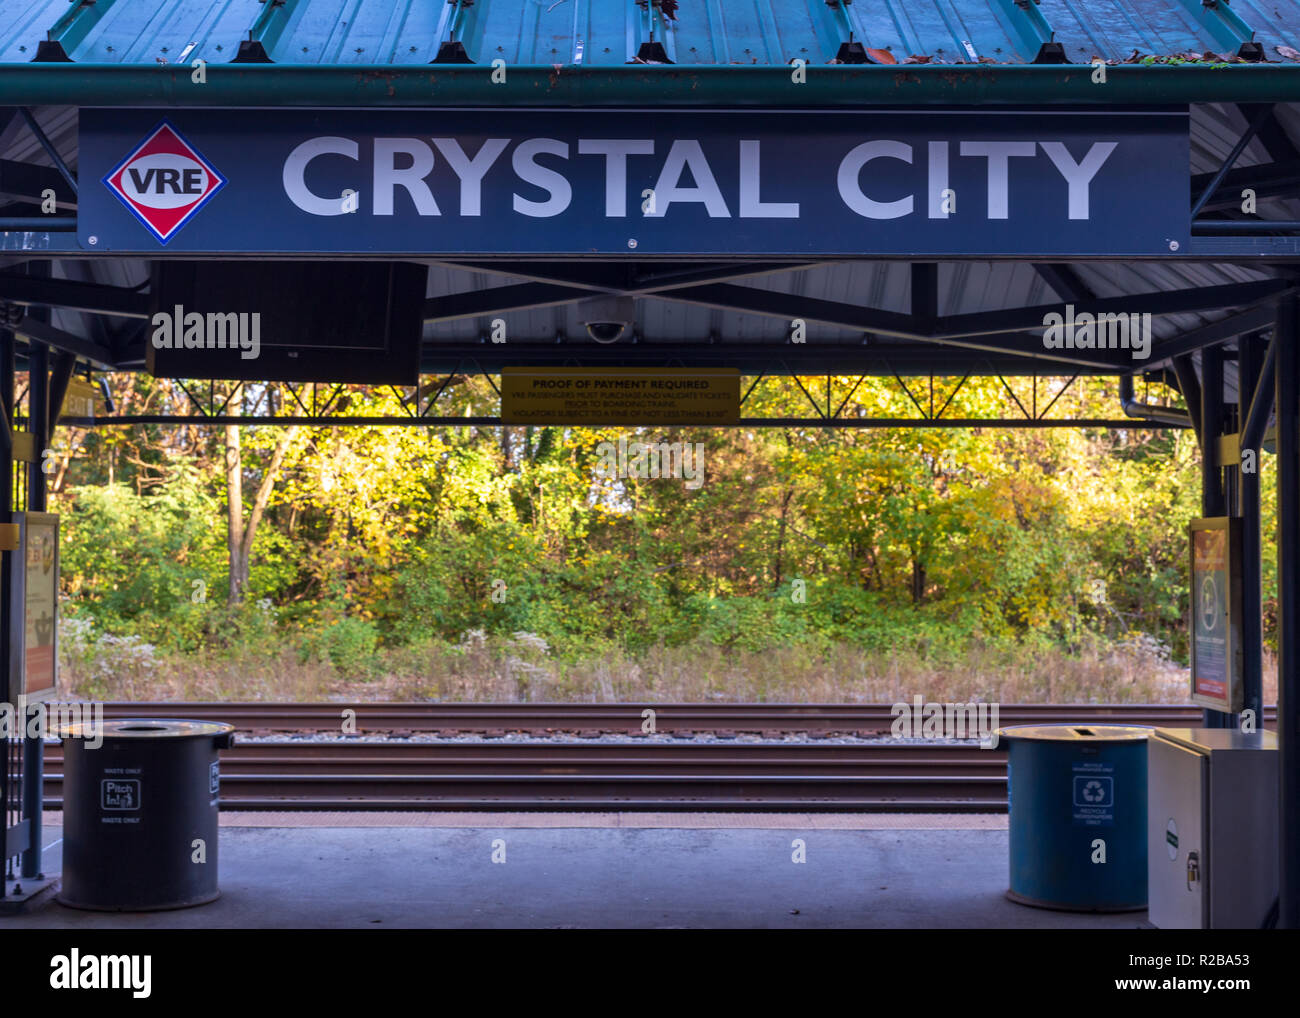 ARLINGTON, V.A. - 17 novembre 2018: Virginia Railway Express commuter rail station in Crystal City Foto Stock